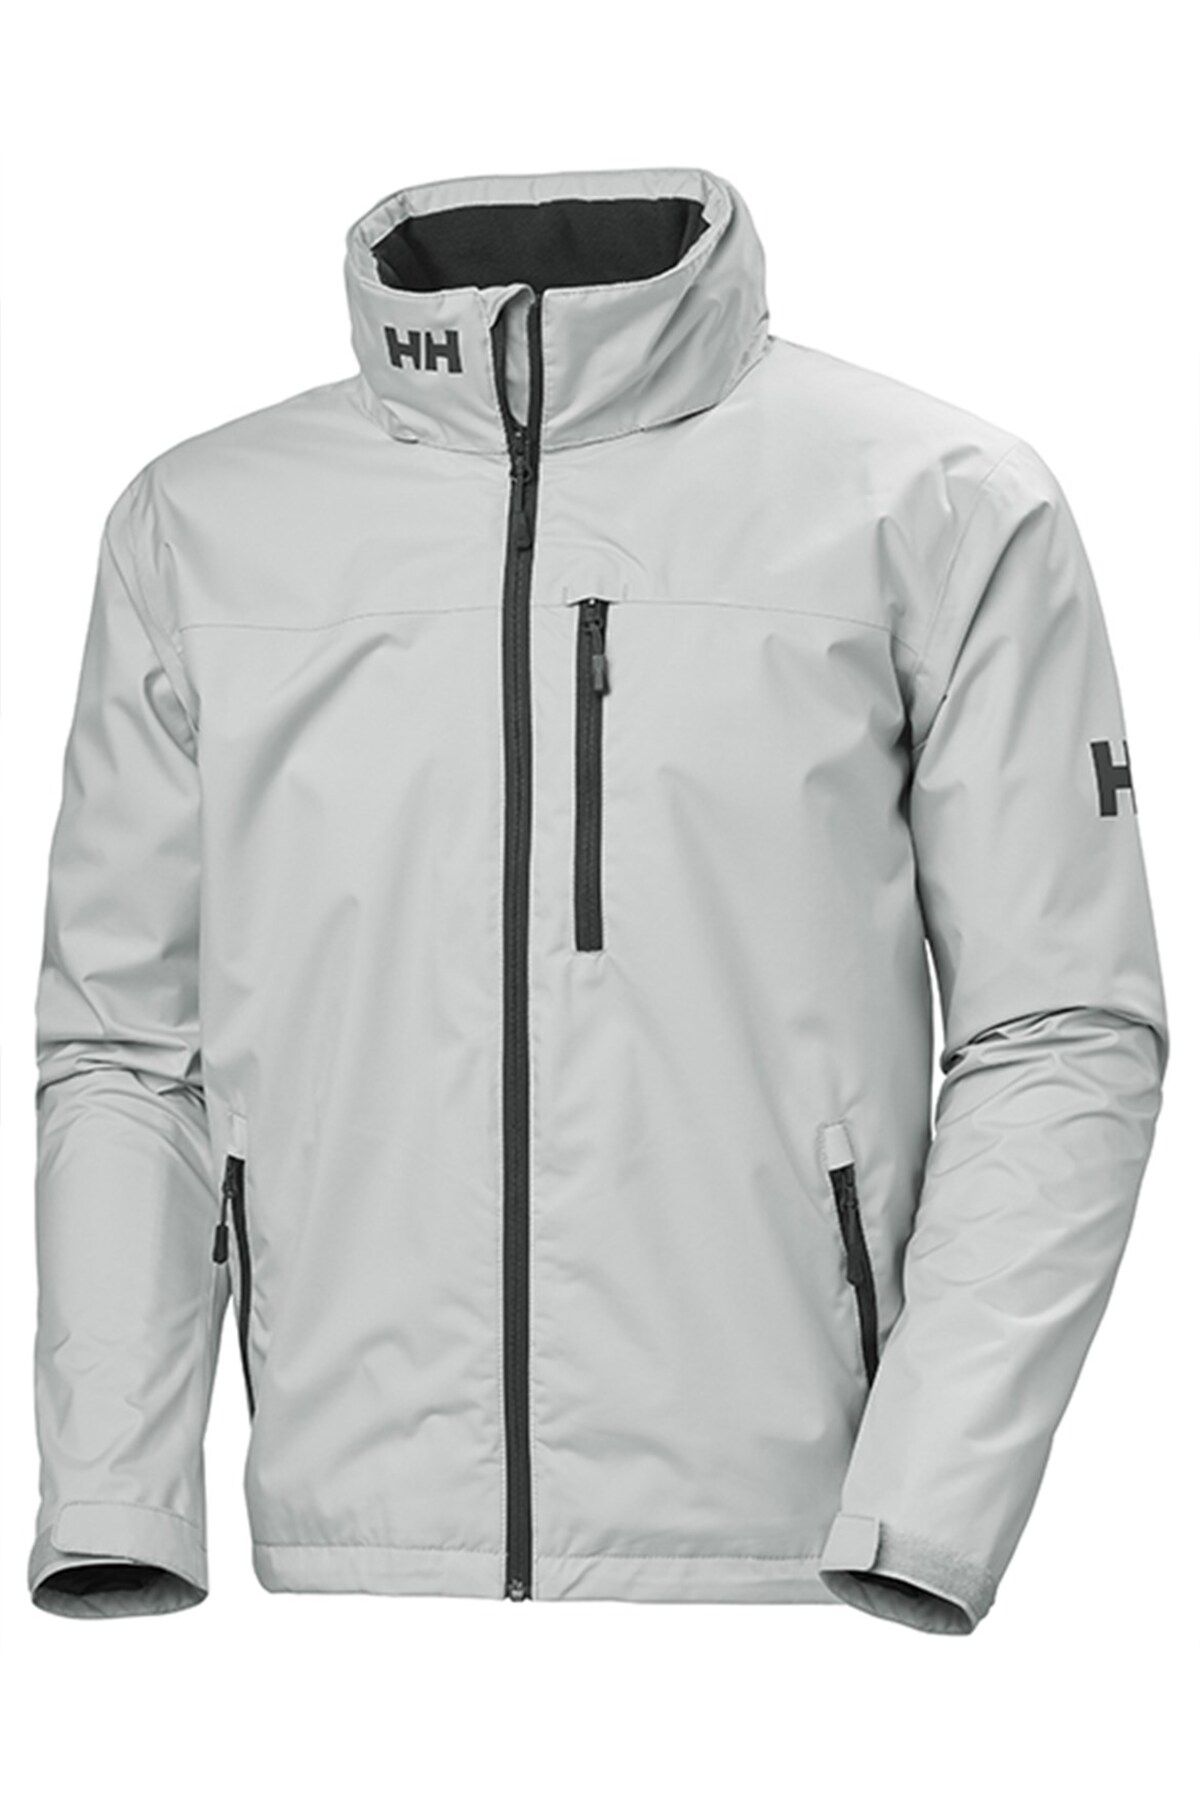 Helly Hansen Hh Crew Hooded Jacket